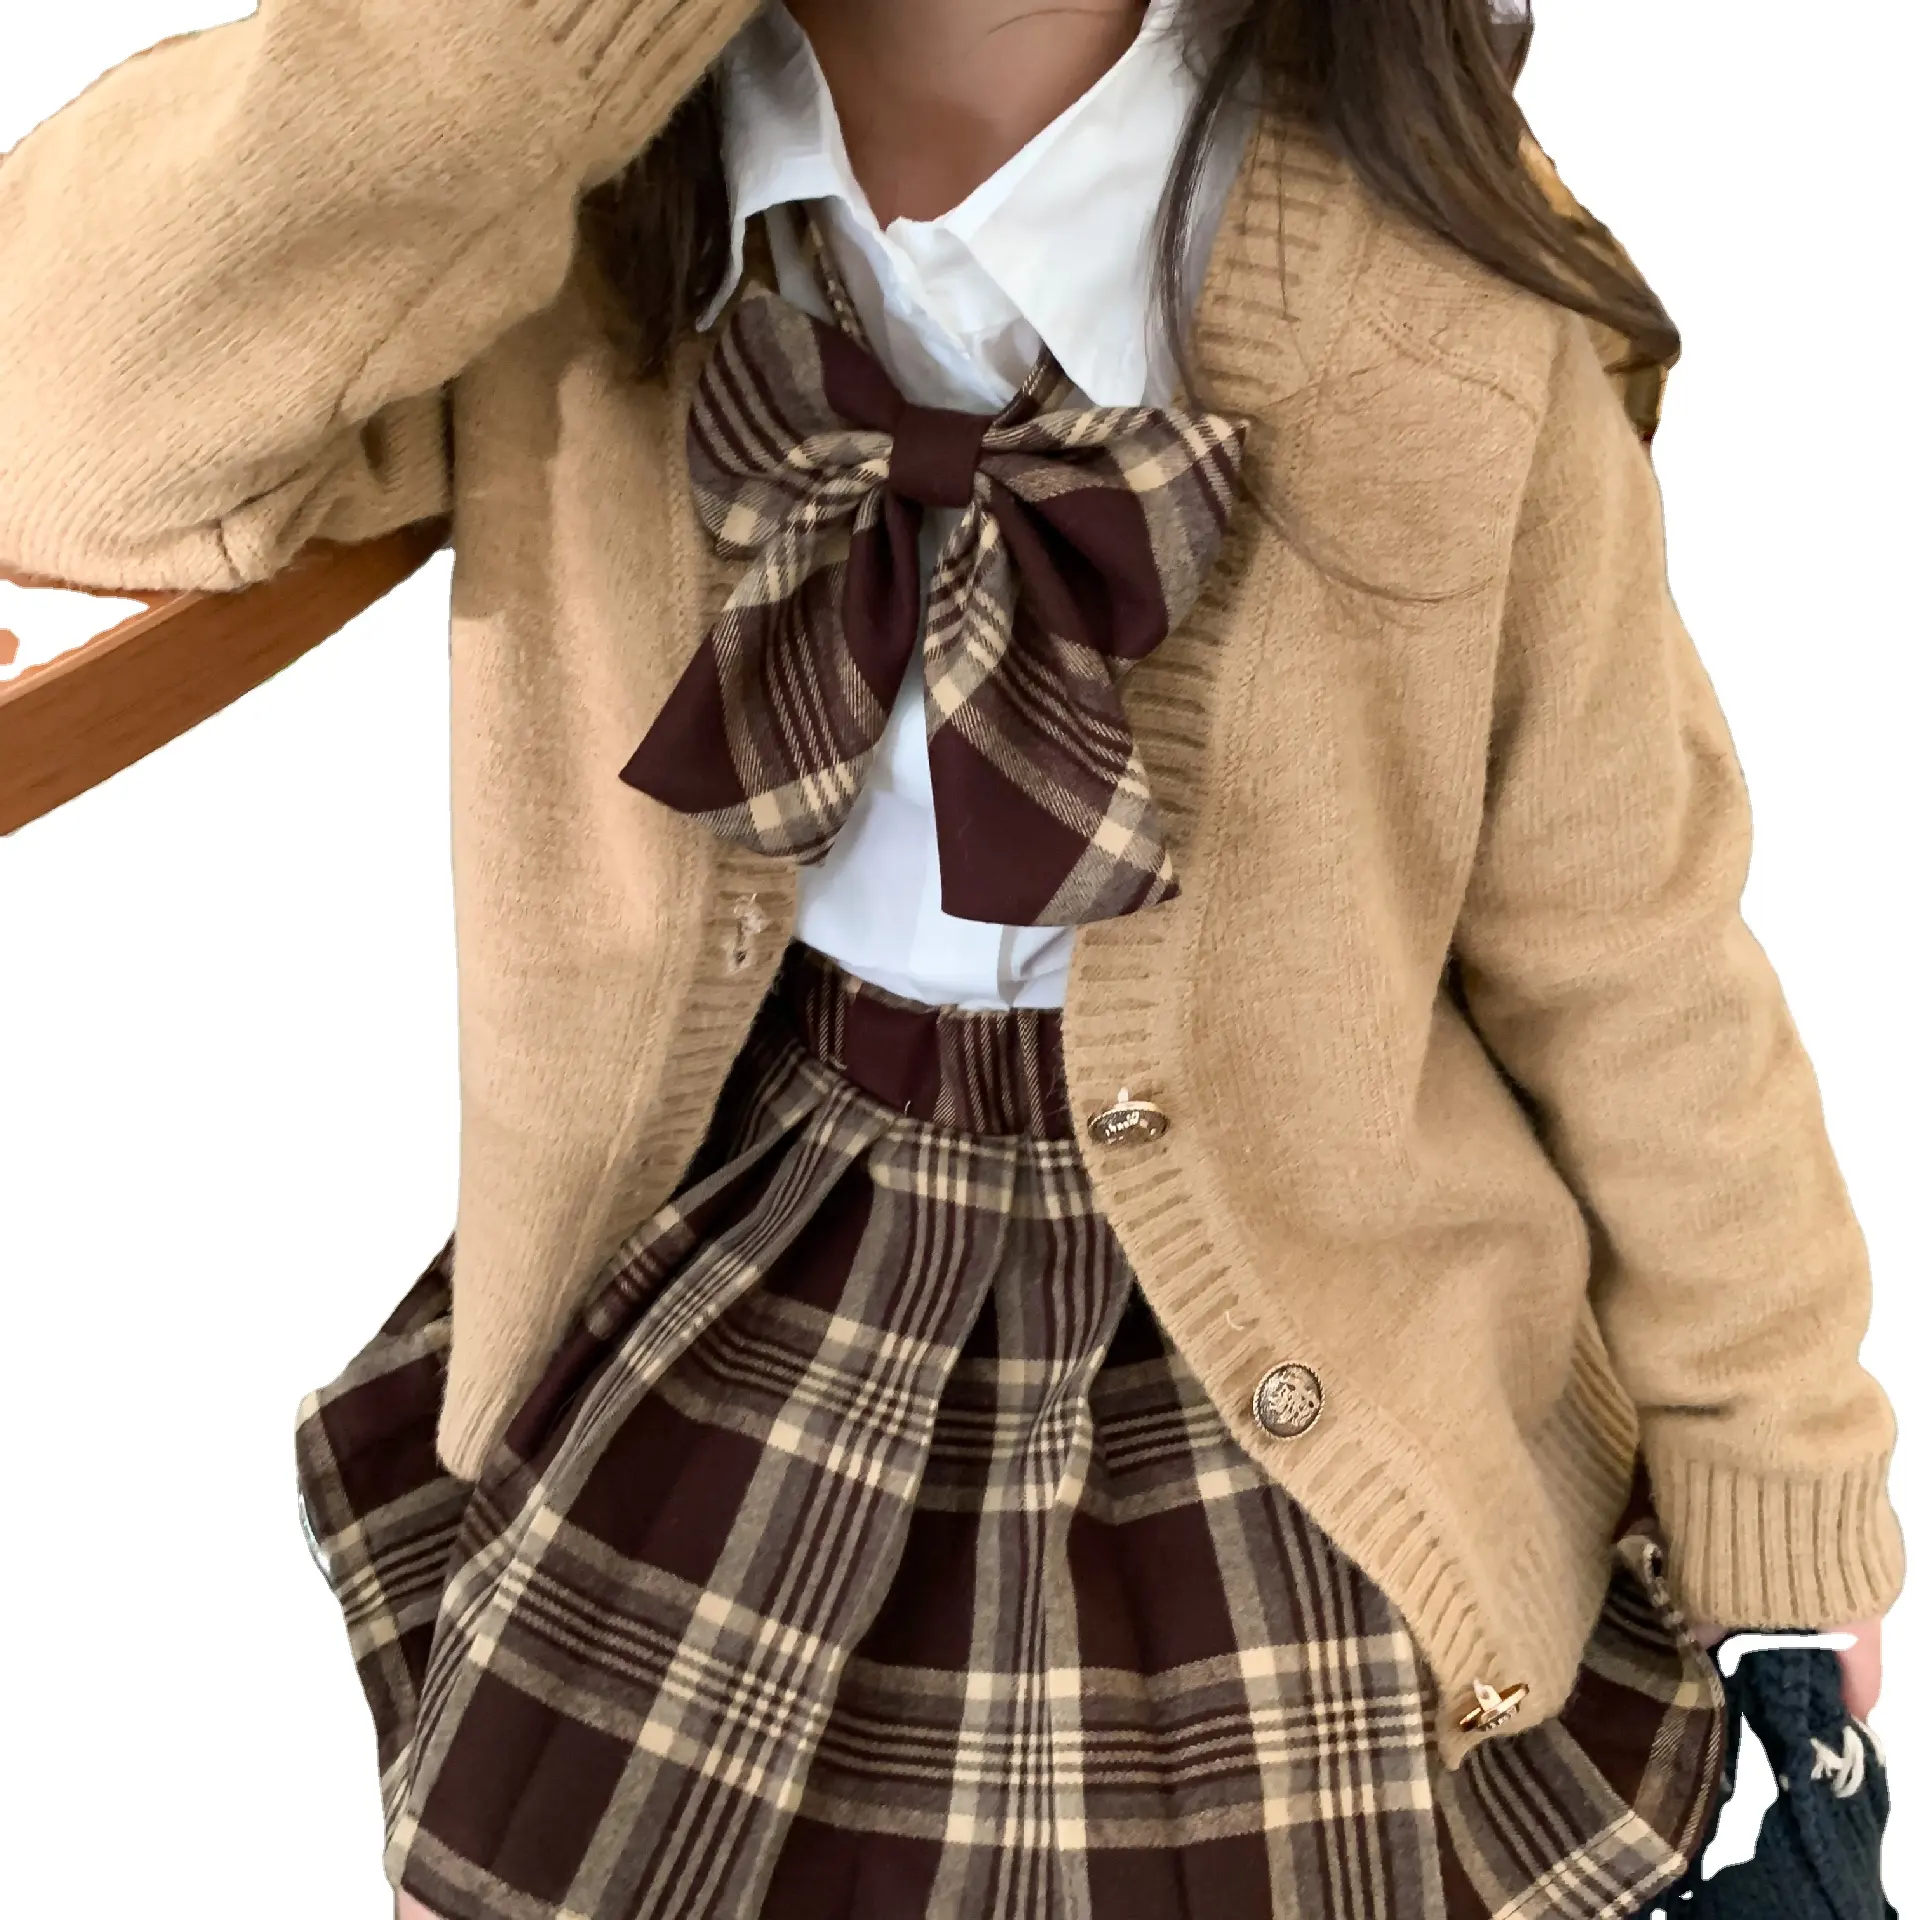 YAJIANUO Autumn Bow Japanese Kids Clothing Sets 3 Pieces Baby Girls' Clothing Sets Sweet Japanese Girl School Uniforms